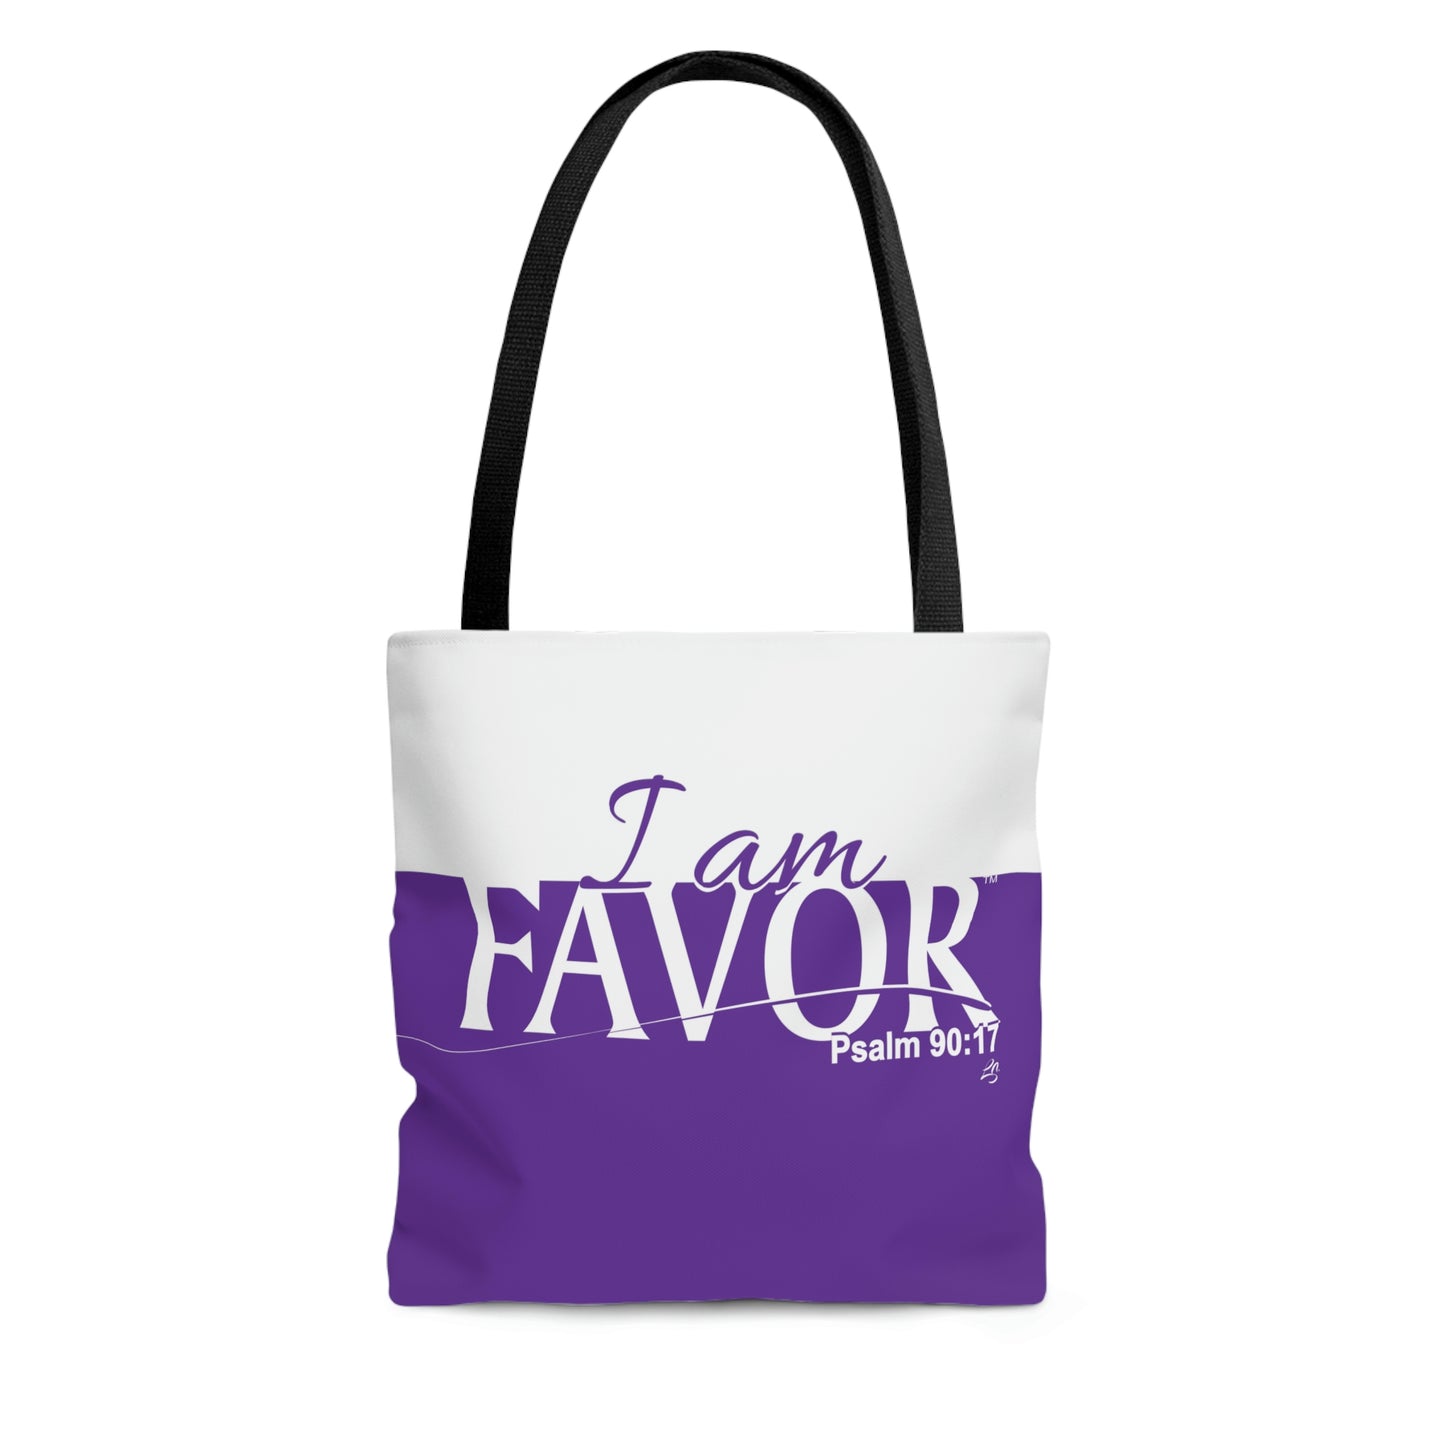 I am FAVOR Tote Bag (PURPLE)